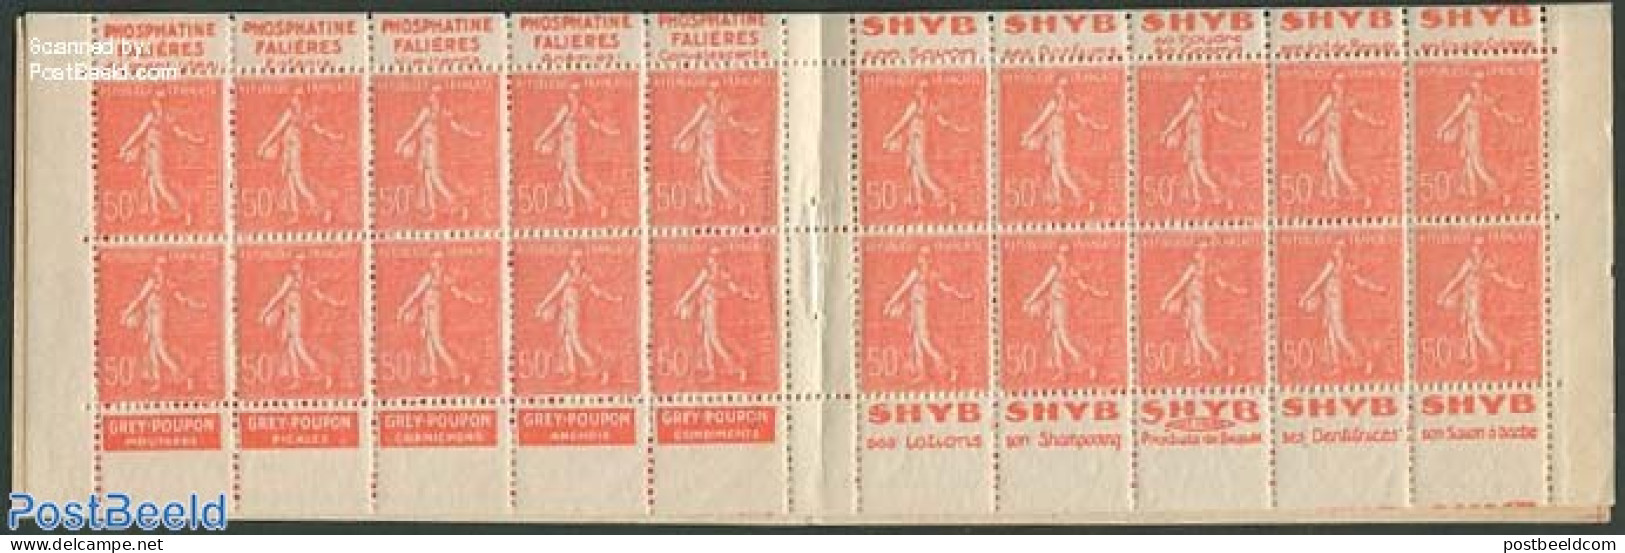 France 1924 20x50c Booklet (Falieres-Shyb-Grey Poupon-Shyb), Mint NH, Stamp Booklets - Nuevos